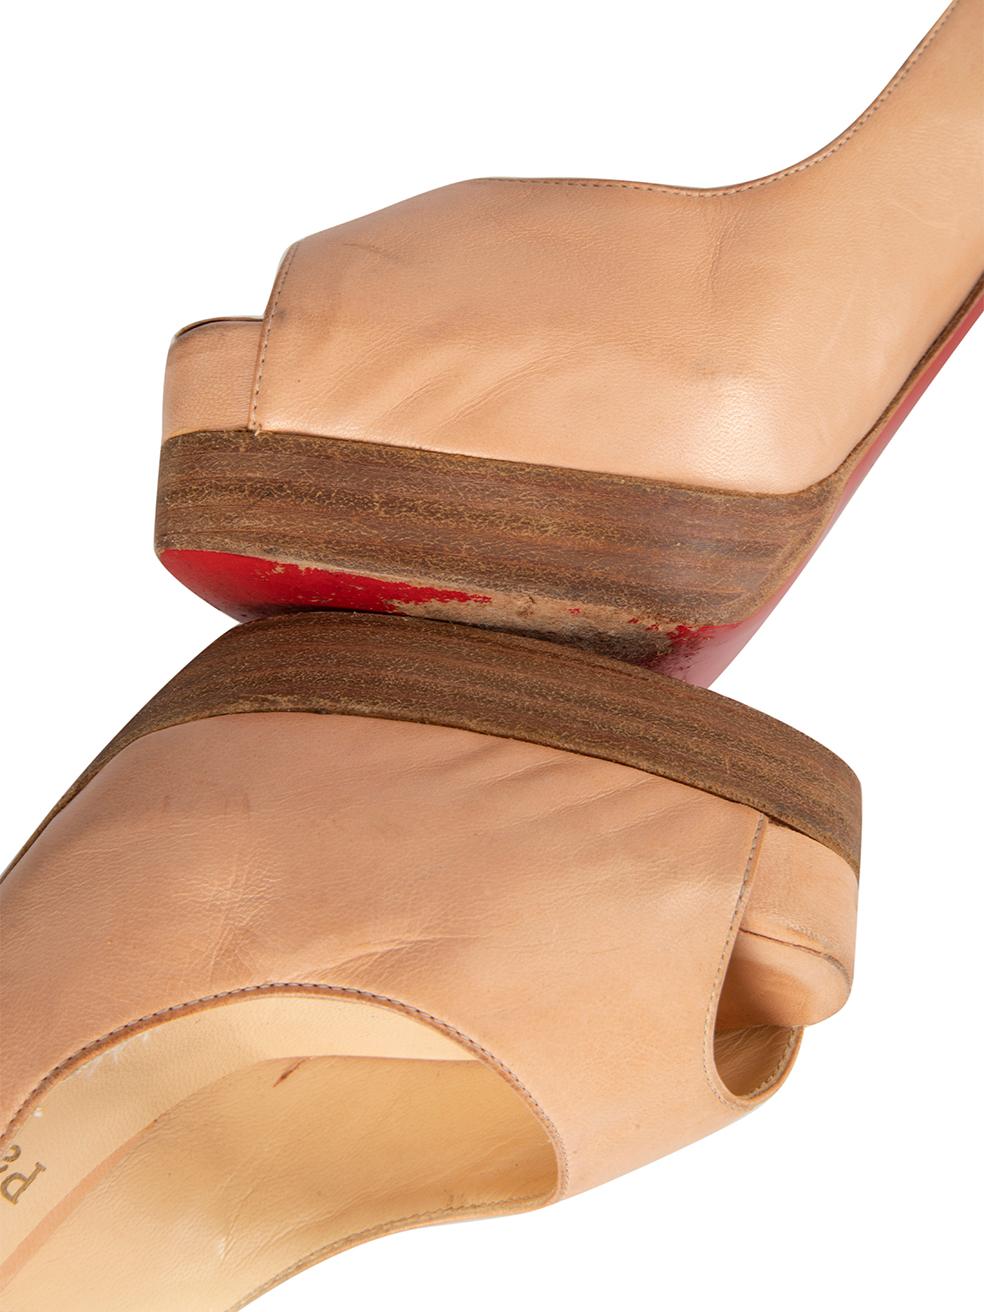 Christian Louboutin Women's Pink Leather Peep Toe Slingback Heels 3